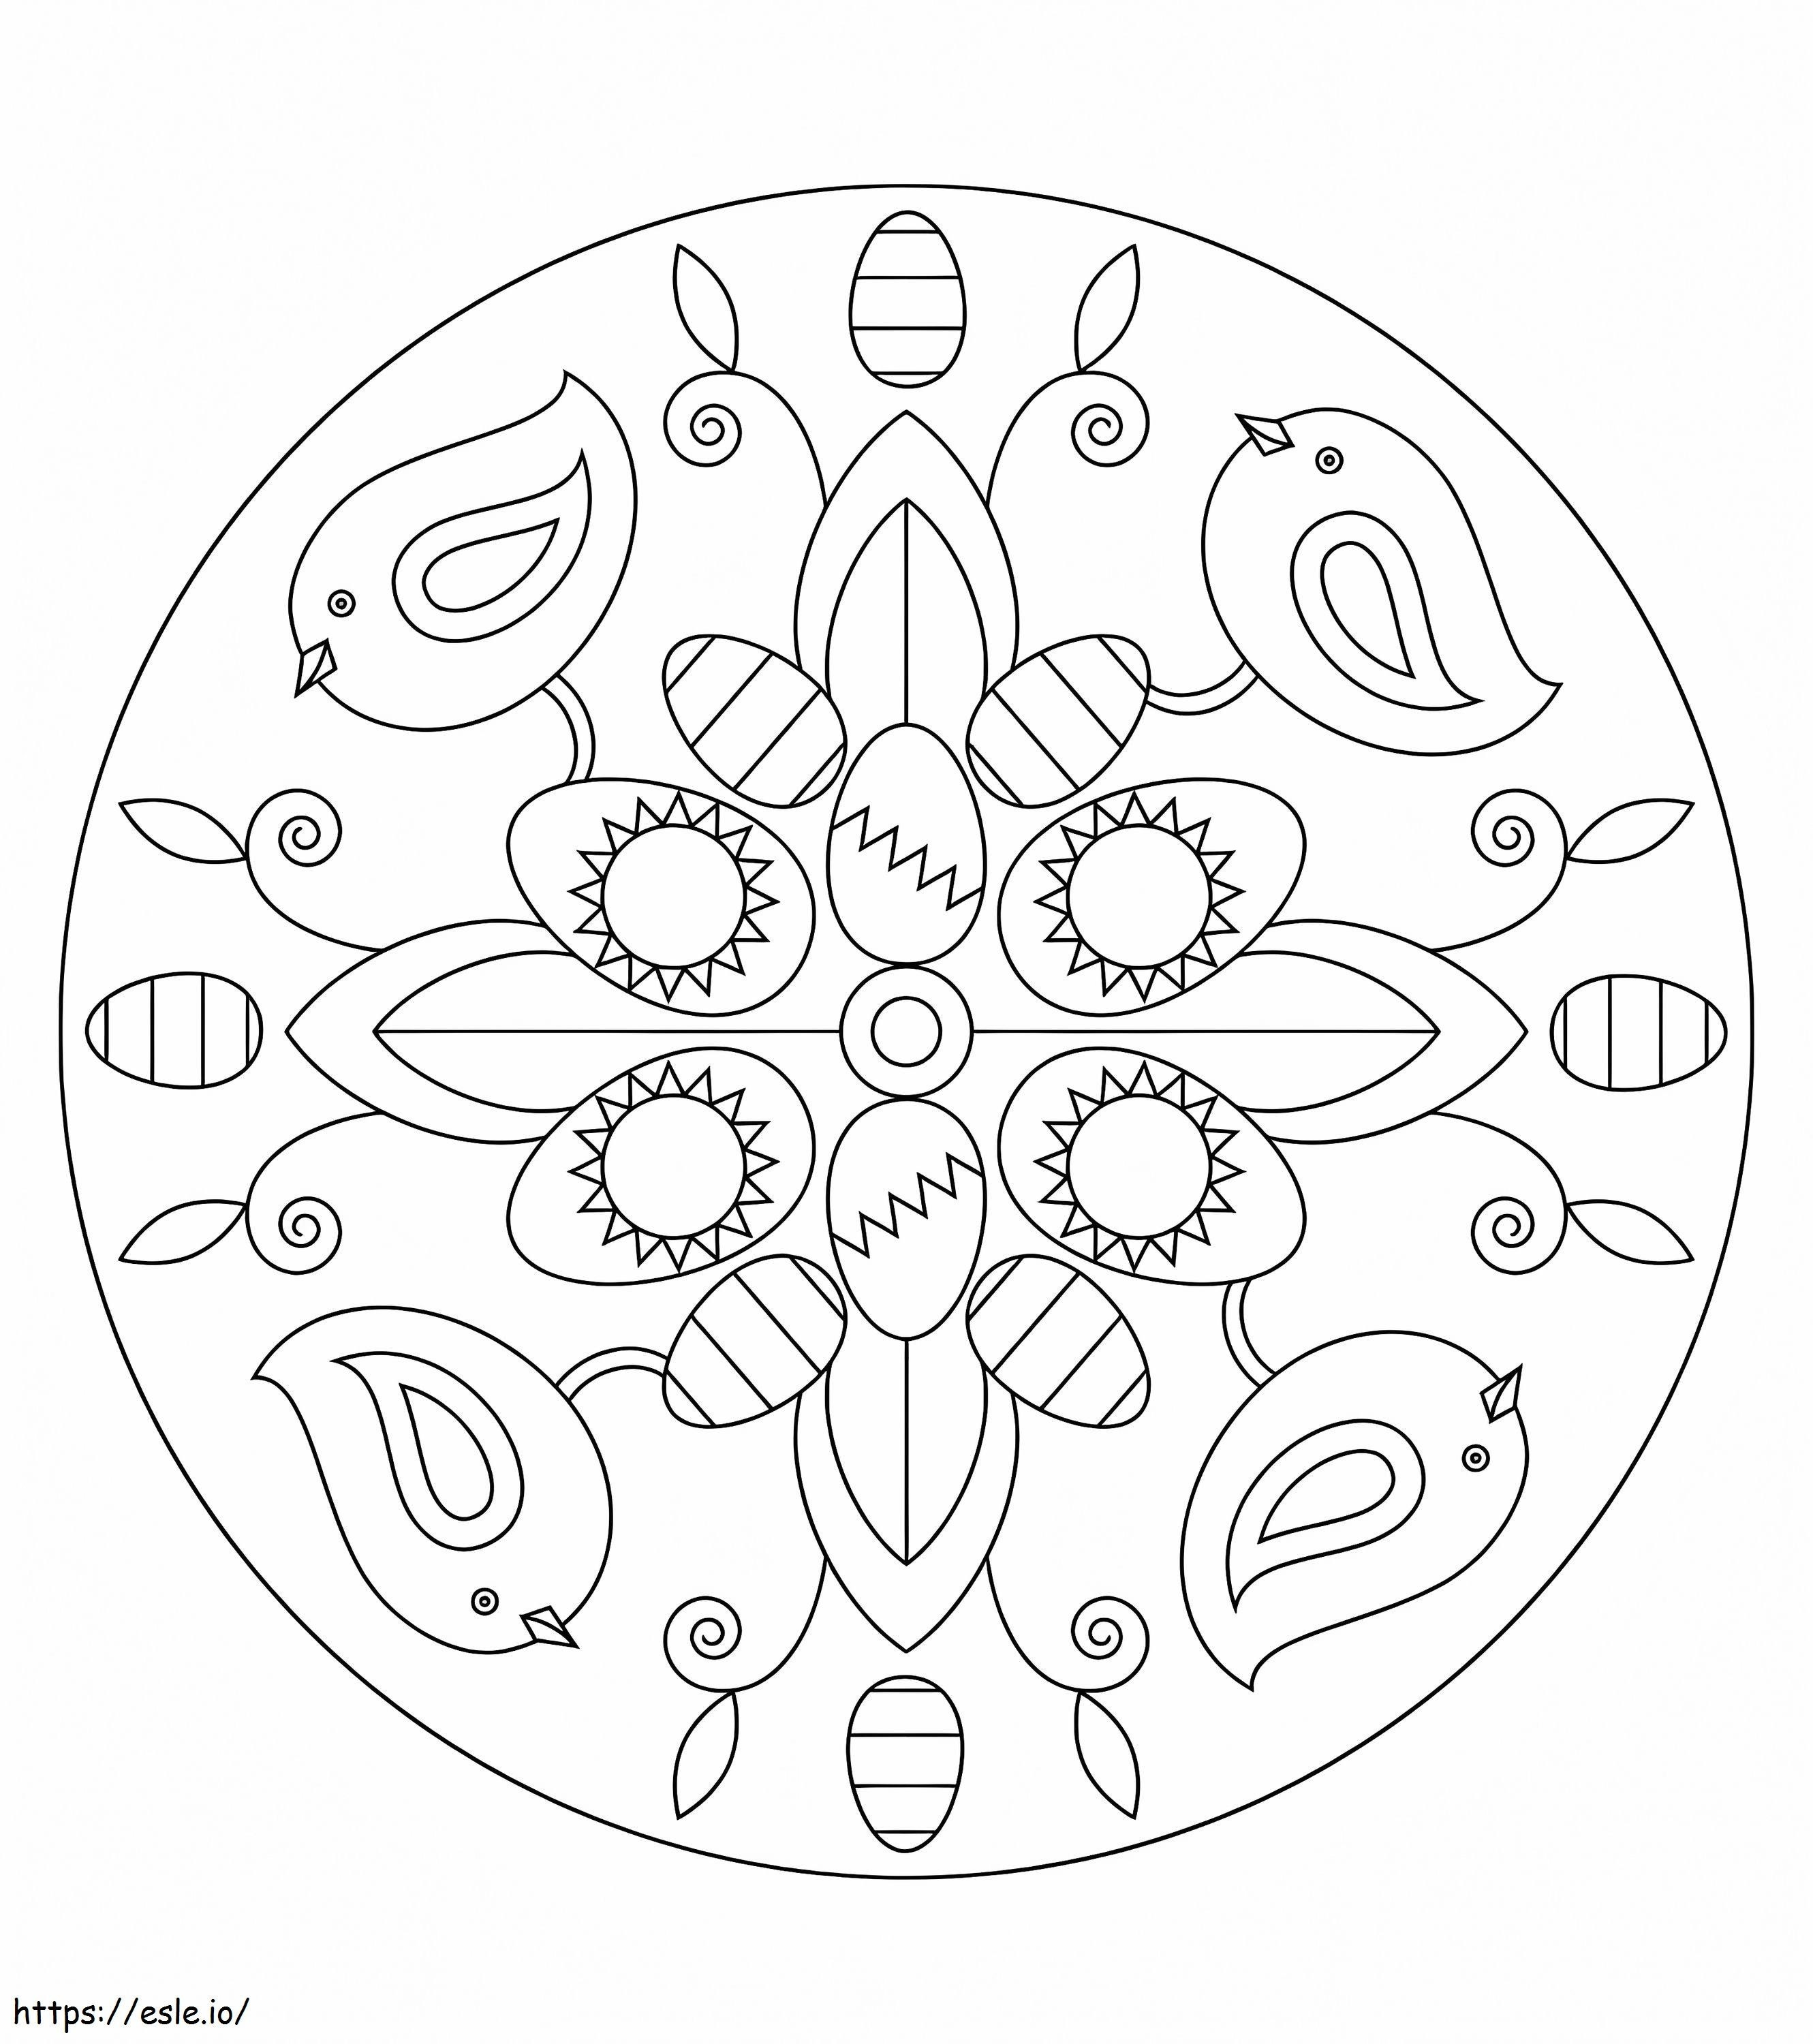 Oster-Mandala mit Vögeln ausmalbilder